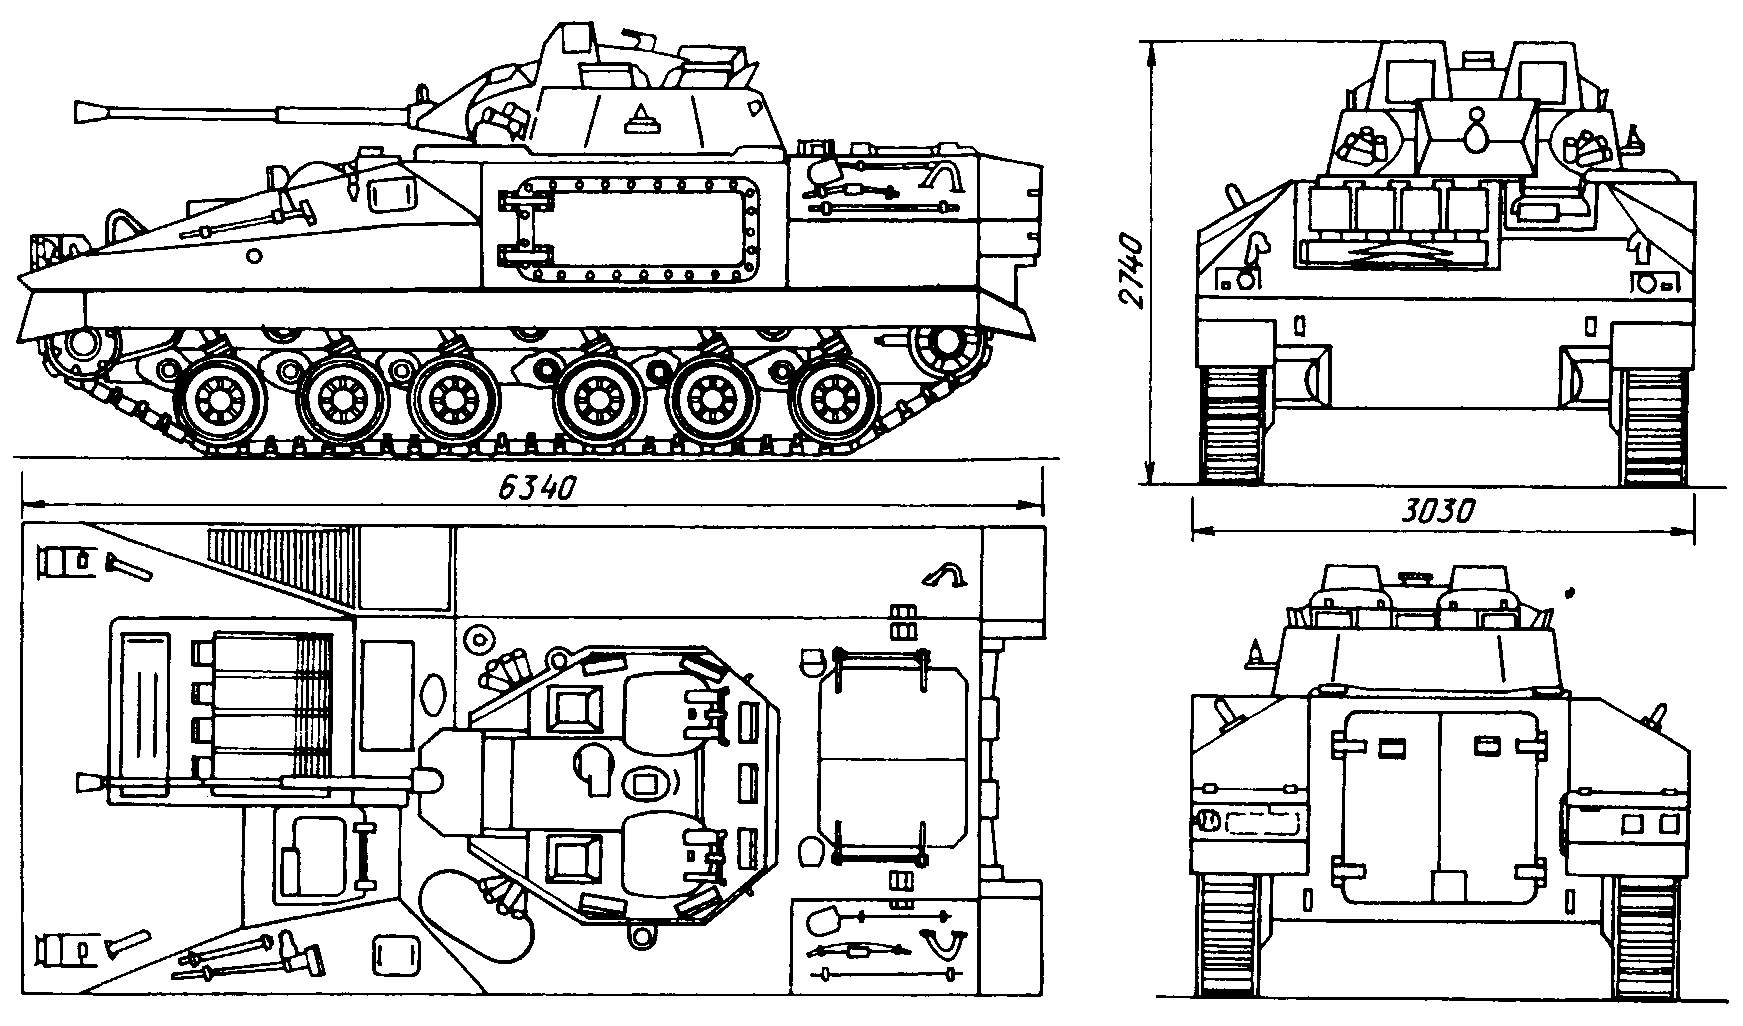 MCV-80 blueprint